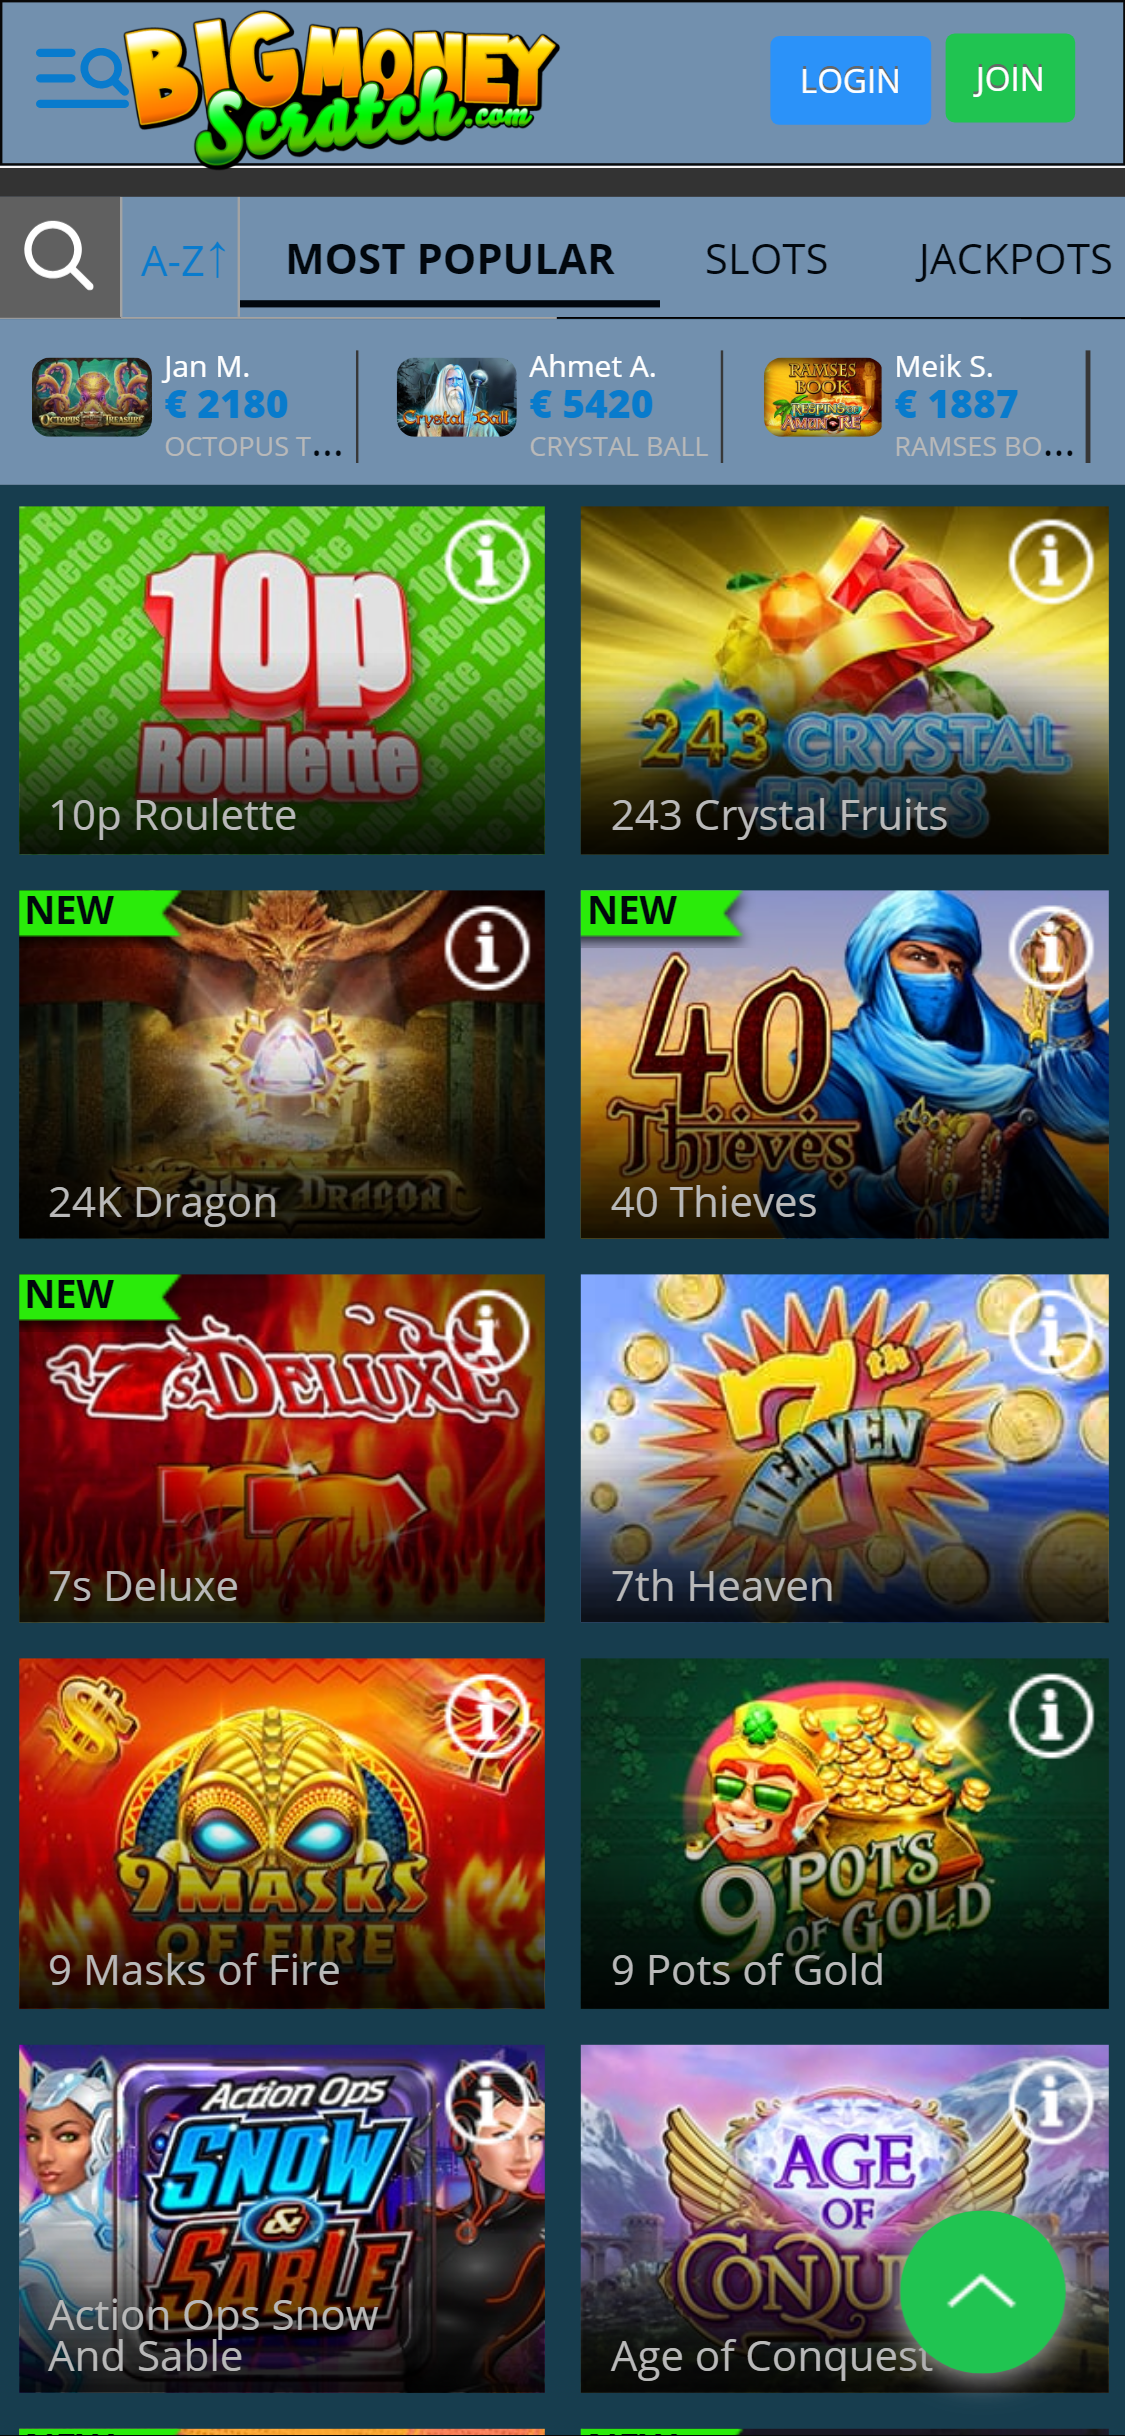 Big Money Scratch Casino Mobile Games Review